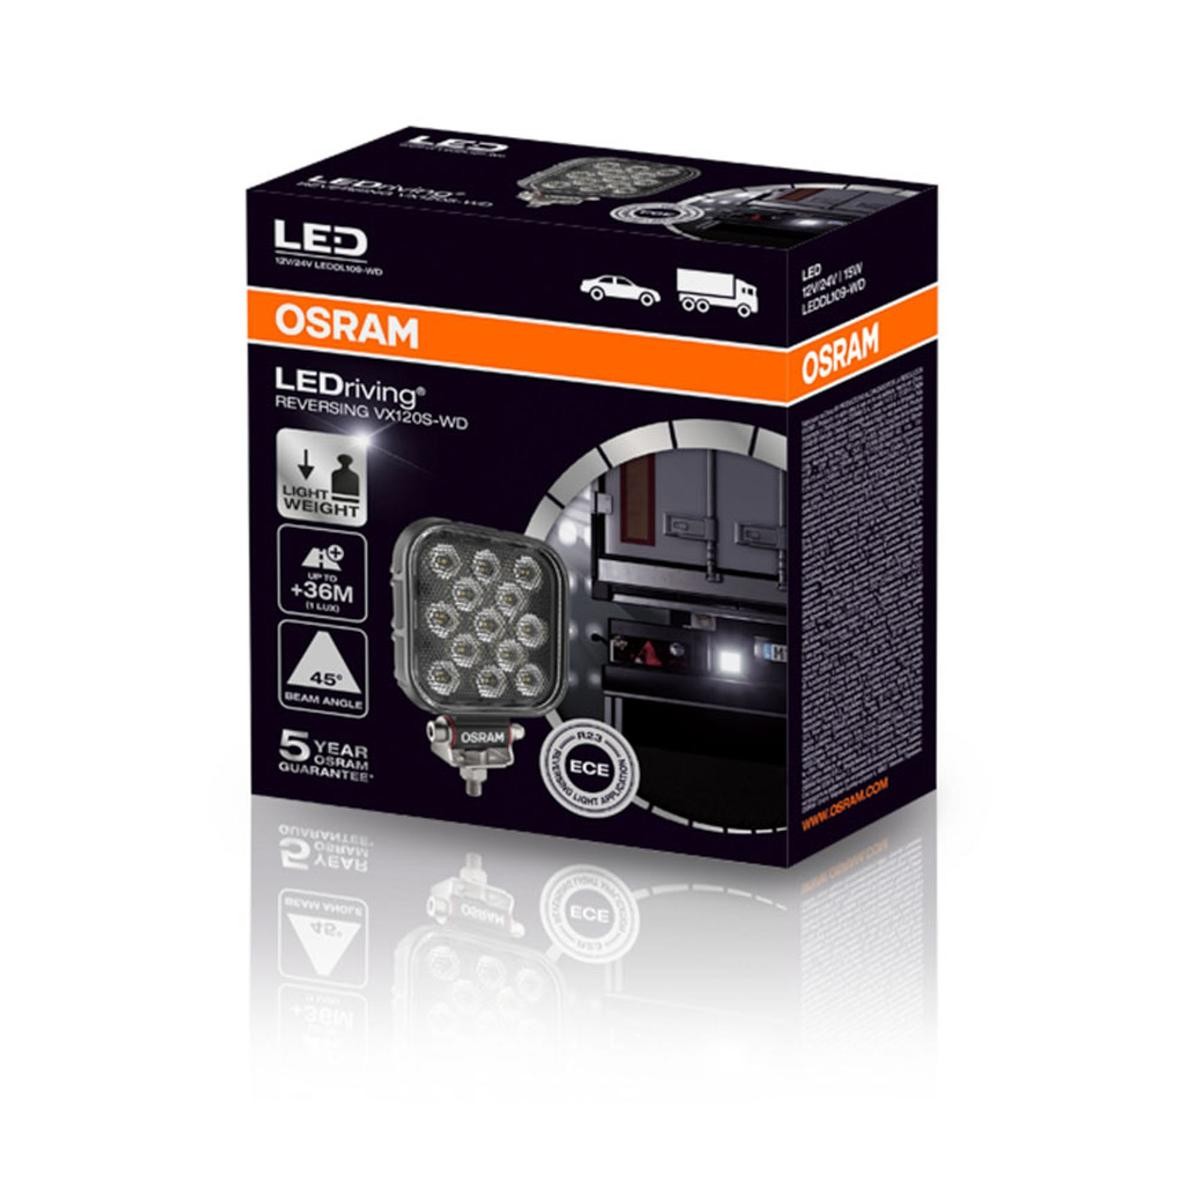 OSRAM LEDriving driving lights - Value Series LEDDL109WD Reverse lights Fiat 500 Convertible 0.9 65 hp Petrol 2018 price